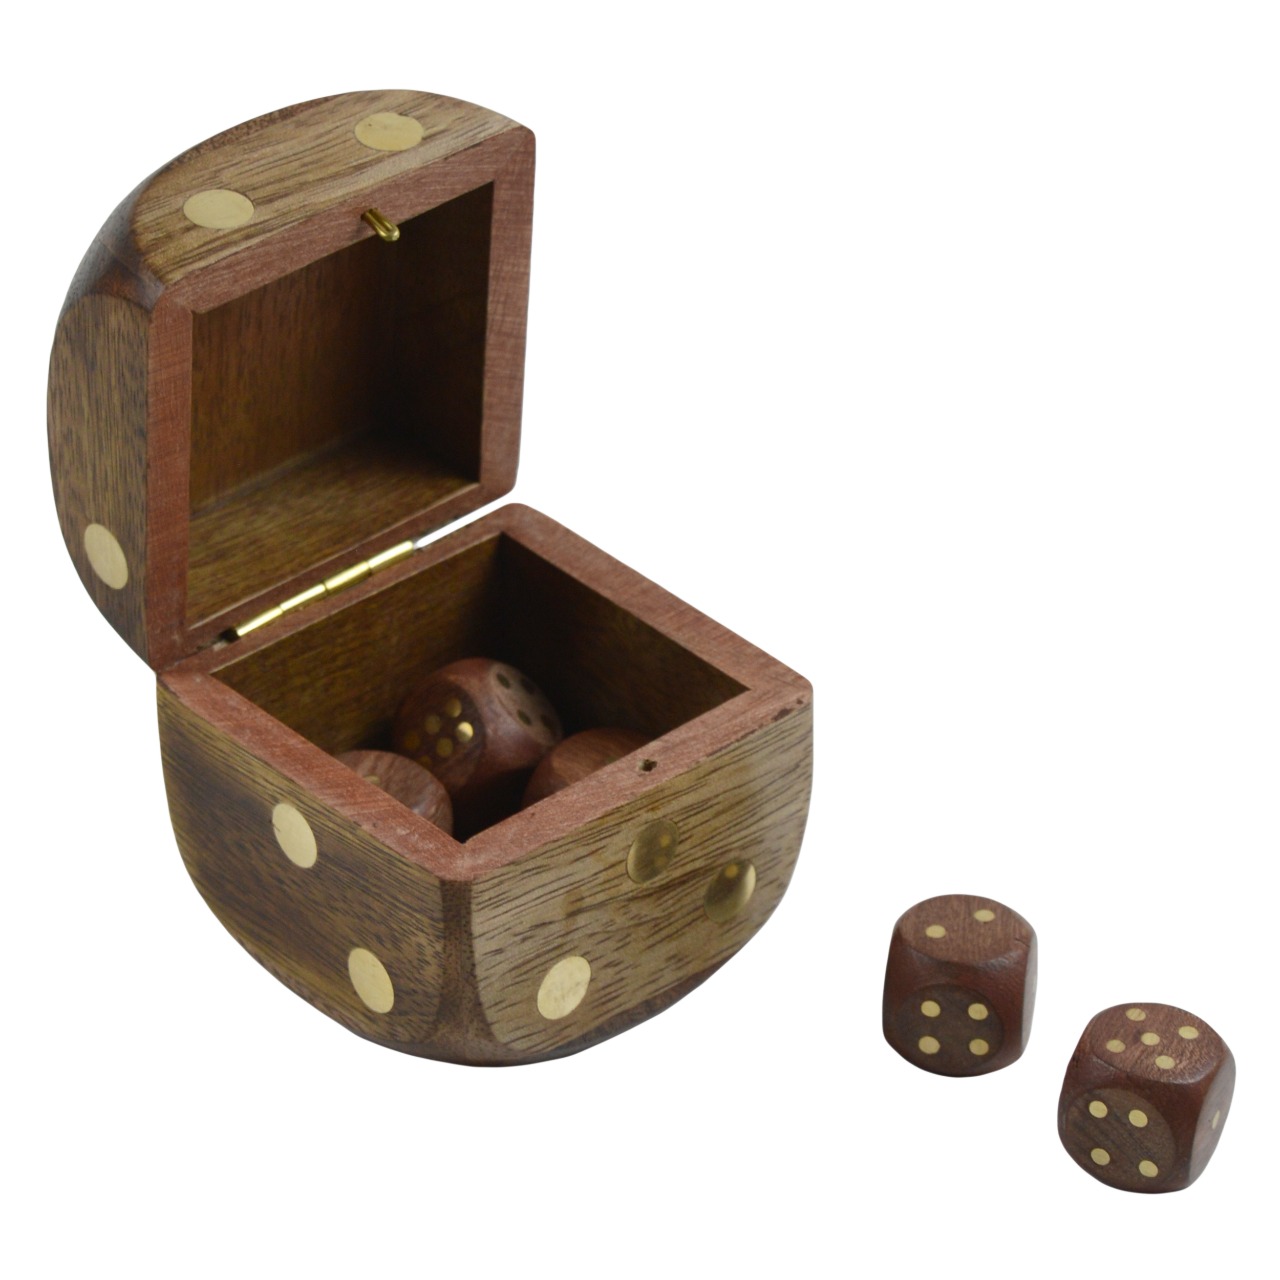 Wooden polished Dice set box